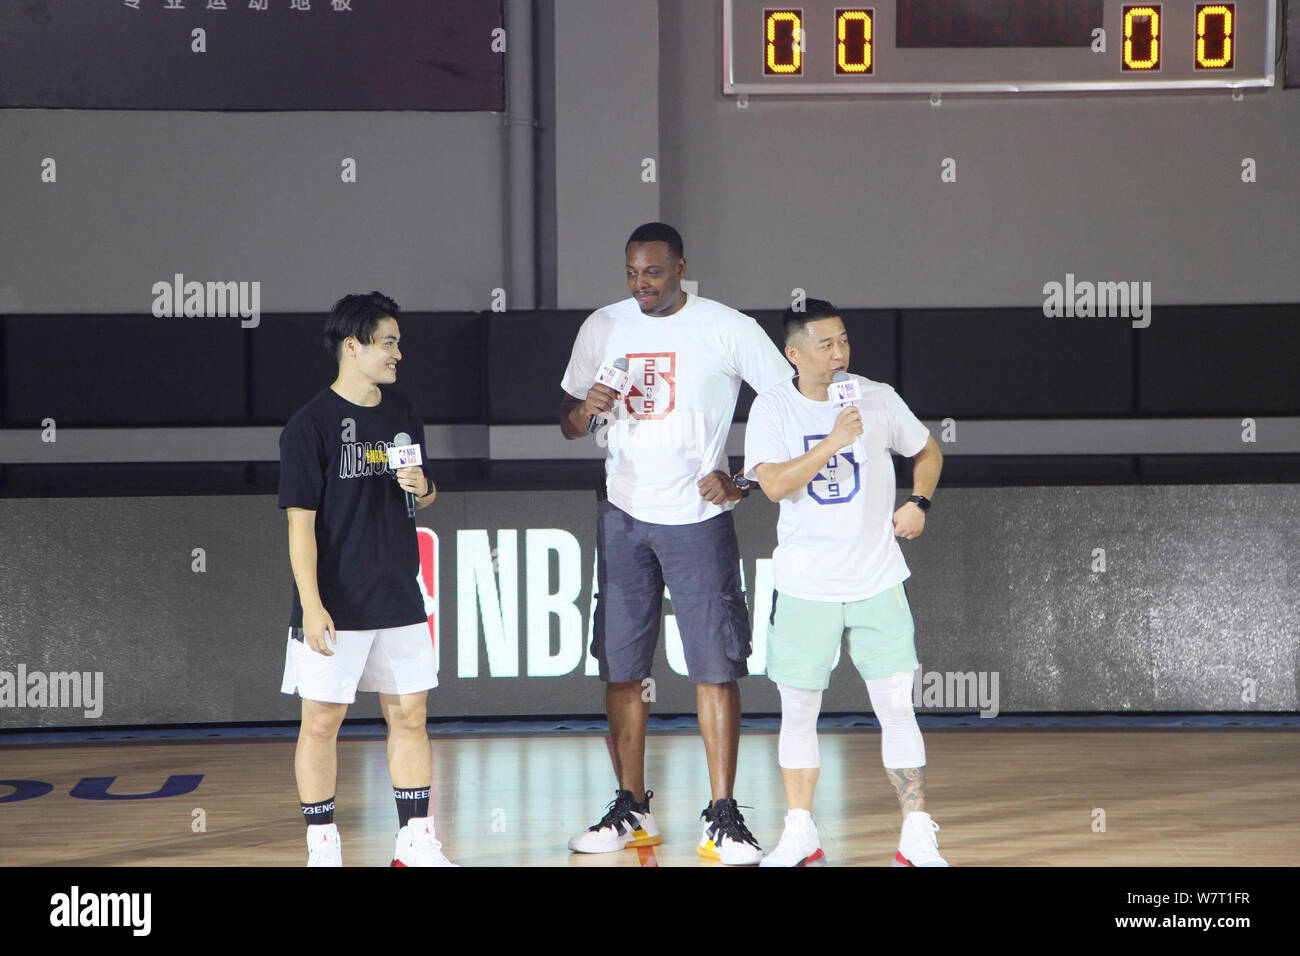 Ehemaliger US-amerikanischer Basketballspieler Paul Pierce besucht die NBA 5v5 2019 In Hangzhou City, East China Zhejiang provinz, den 3. August 2019. Stockfoto